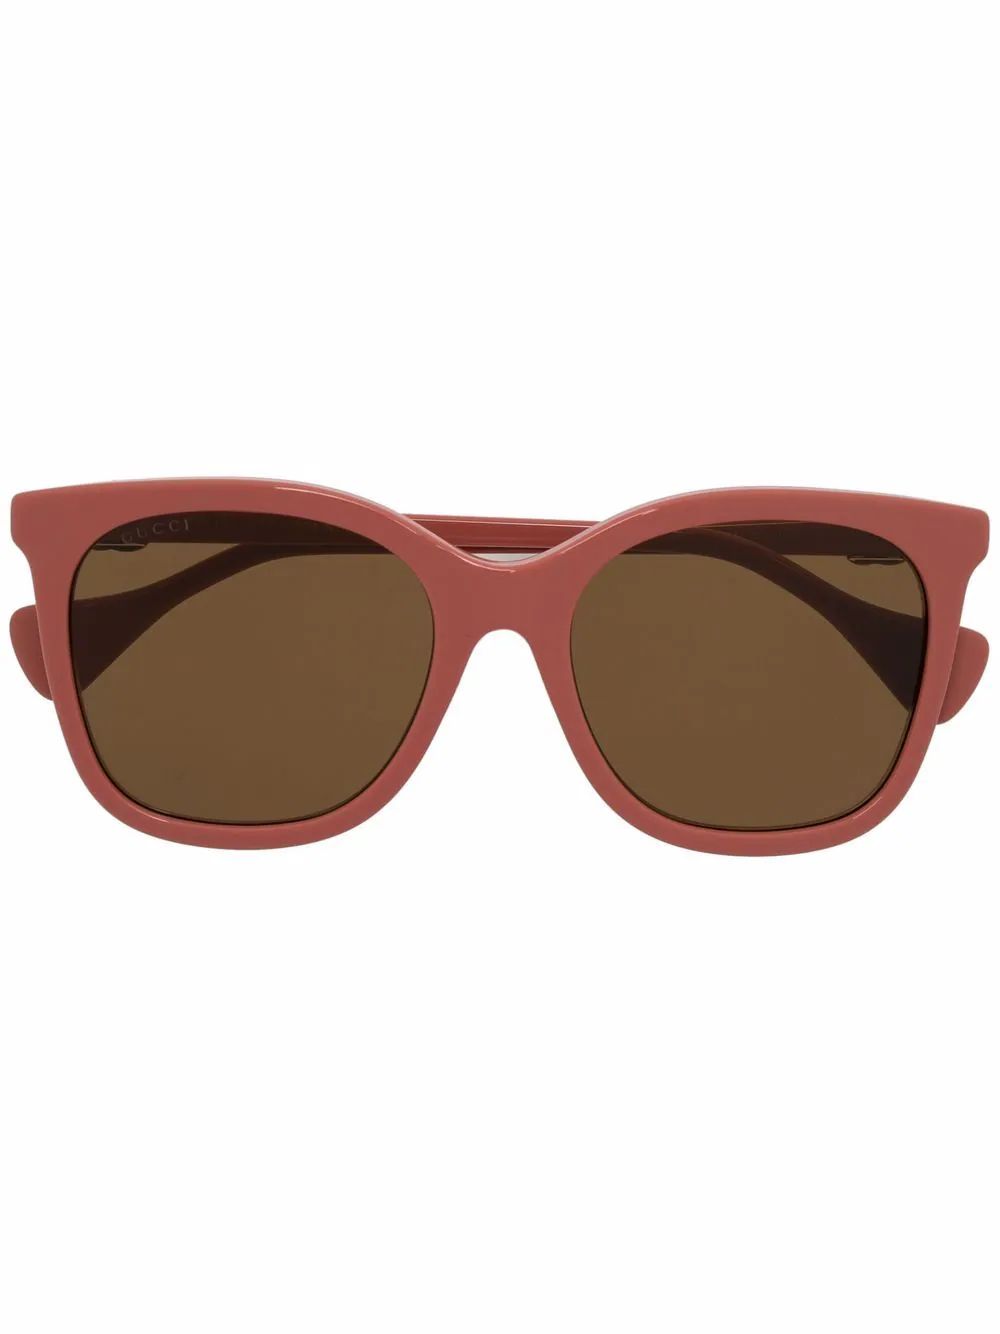 GG square-frame sunglasses | Farfetch Global